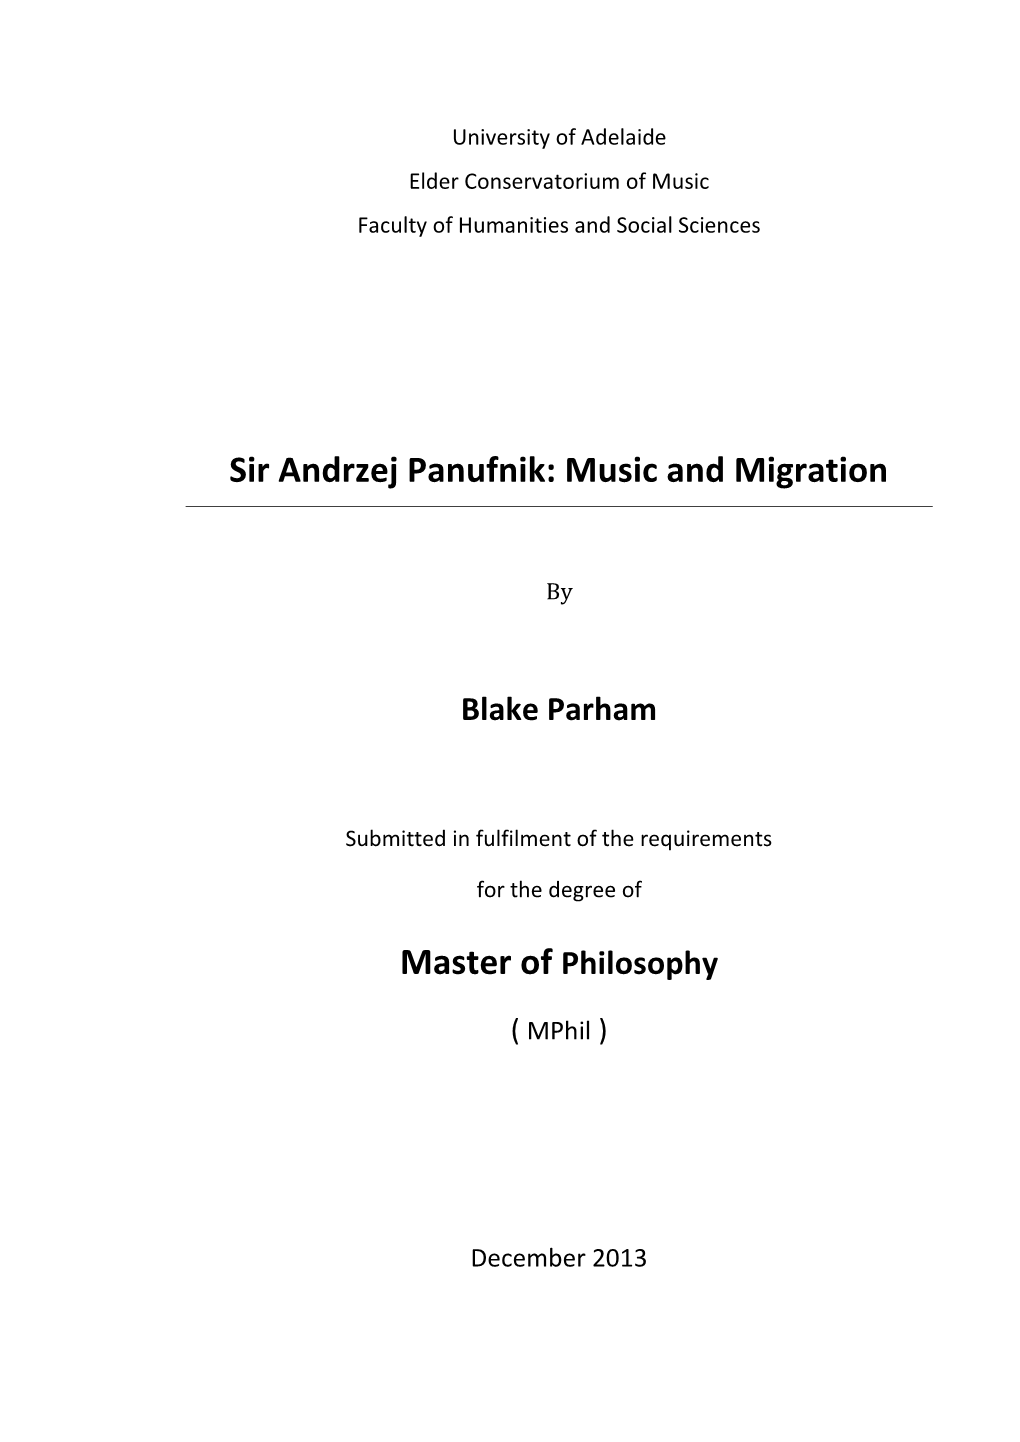 Sir Andrzej Panufnik: Music and Migration